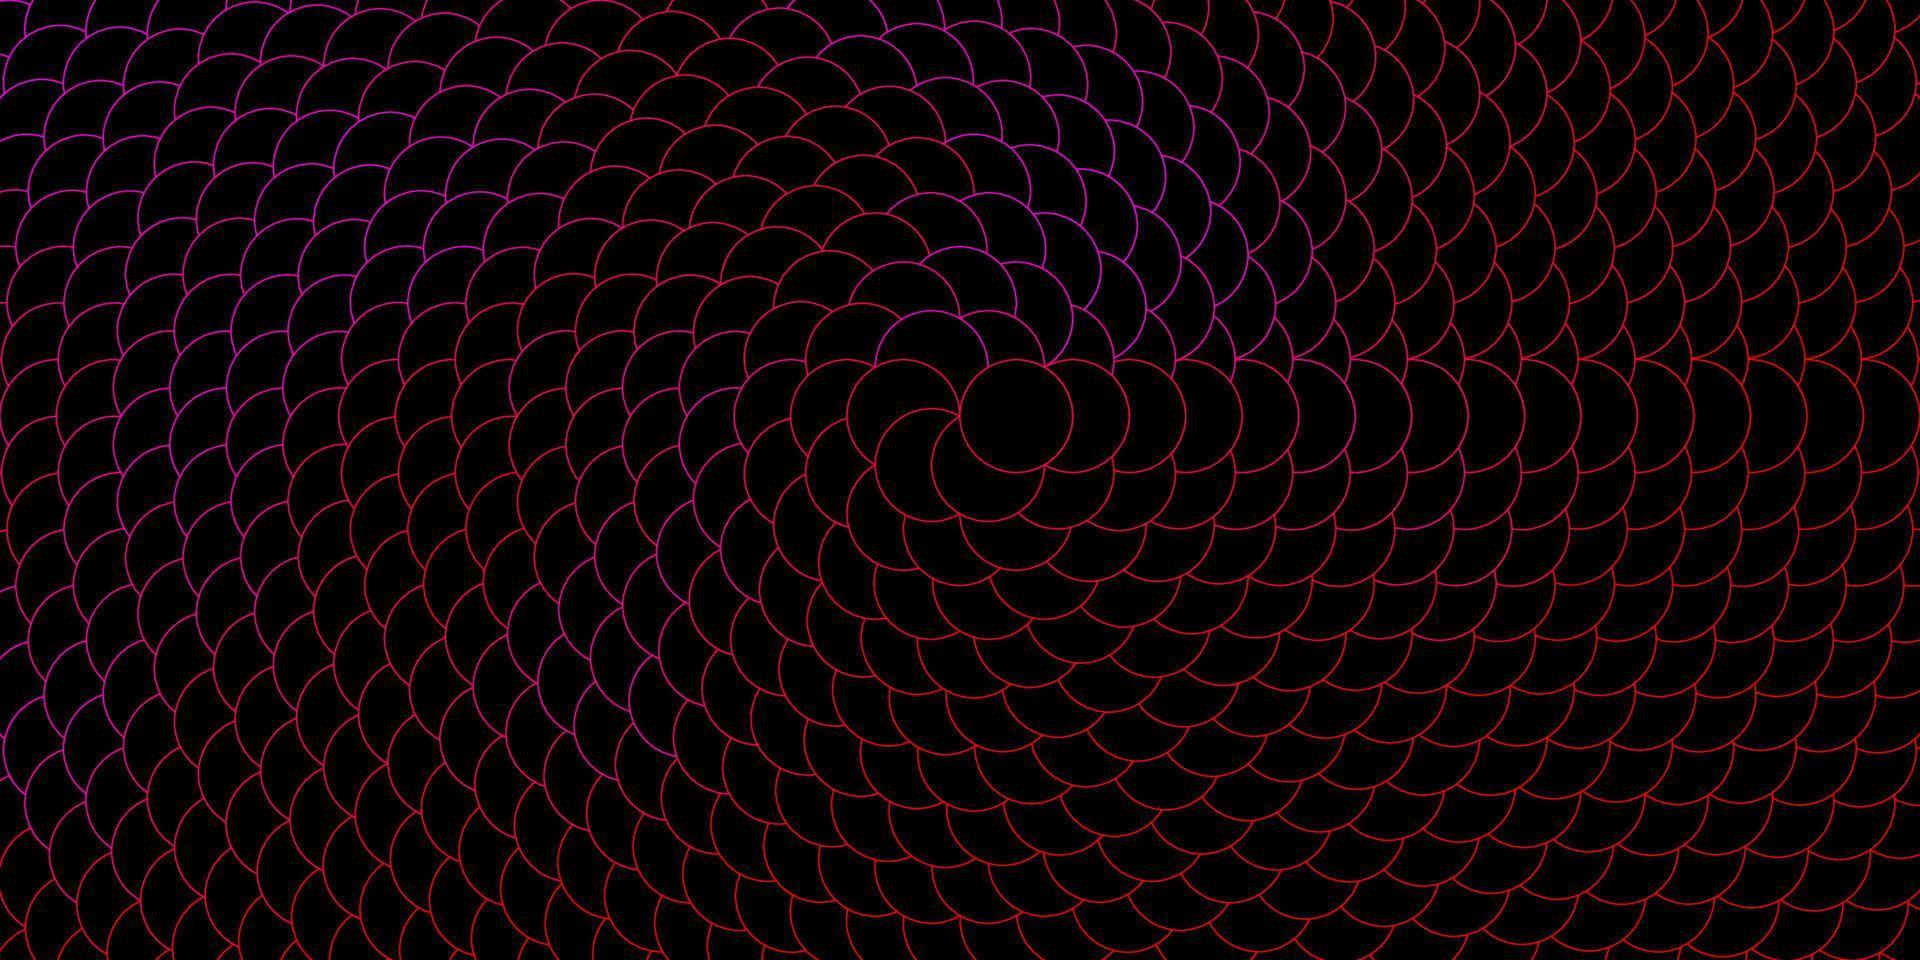 pano de fundo vector rosa escuro com pontos.